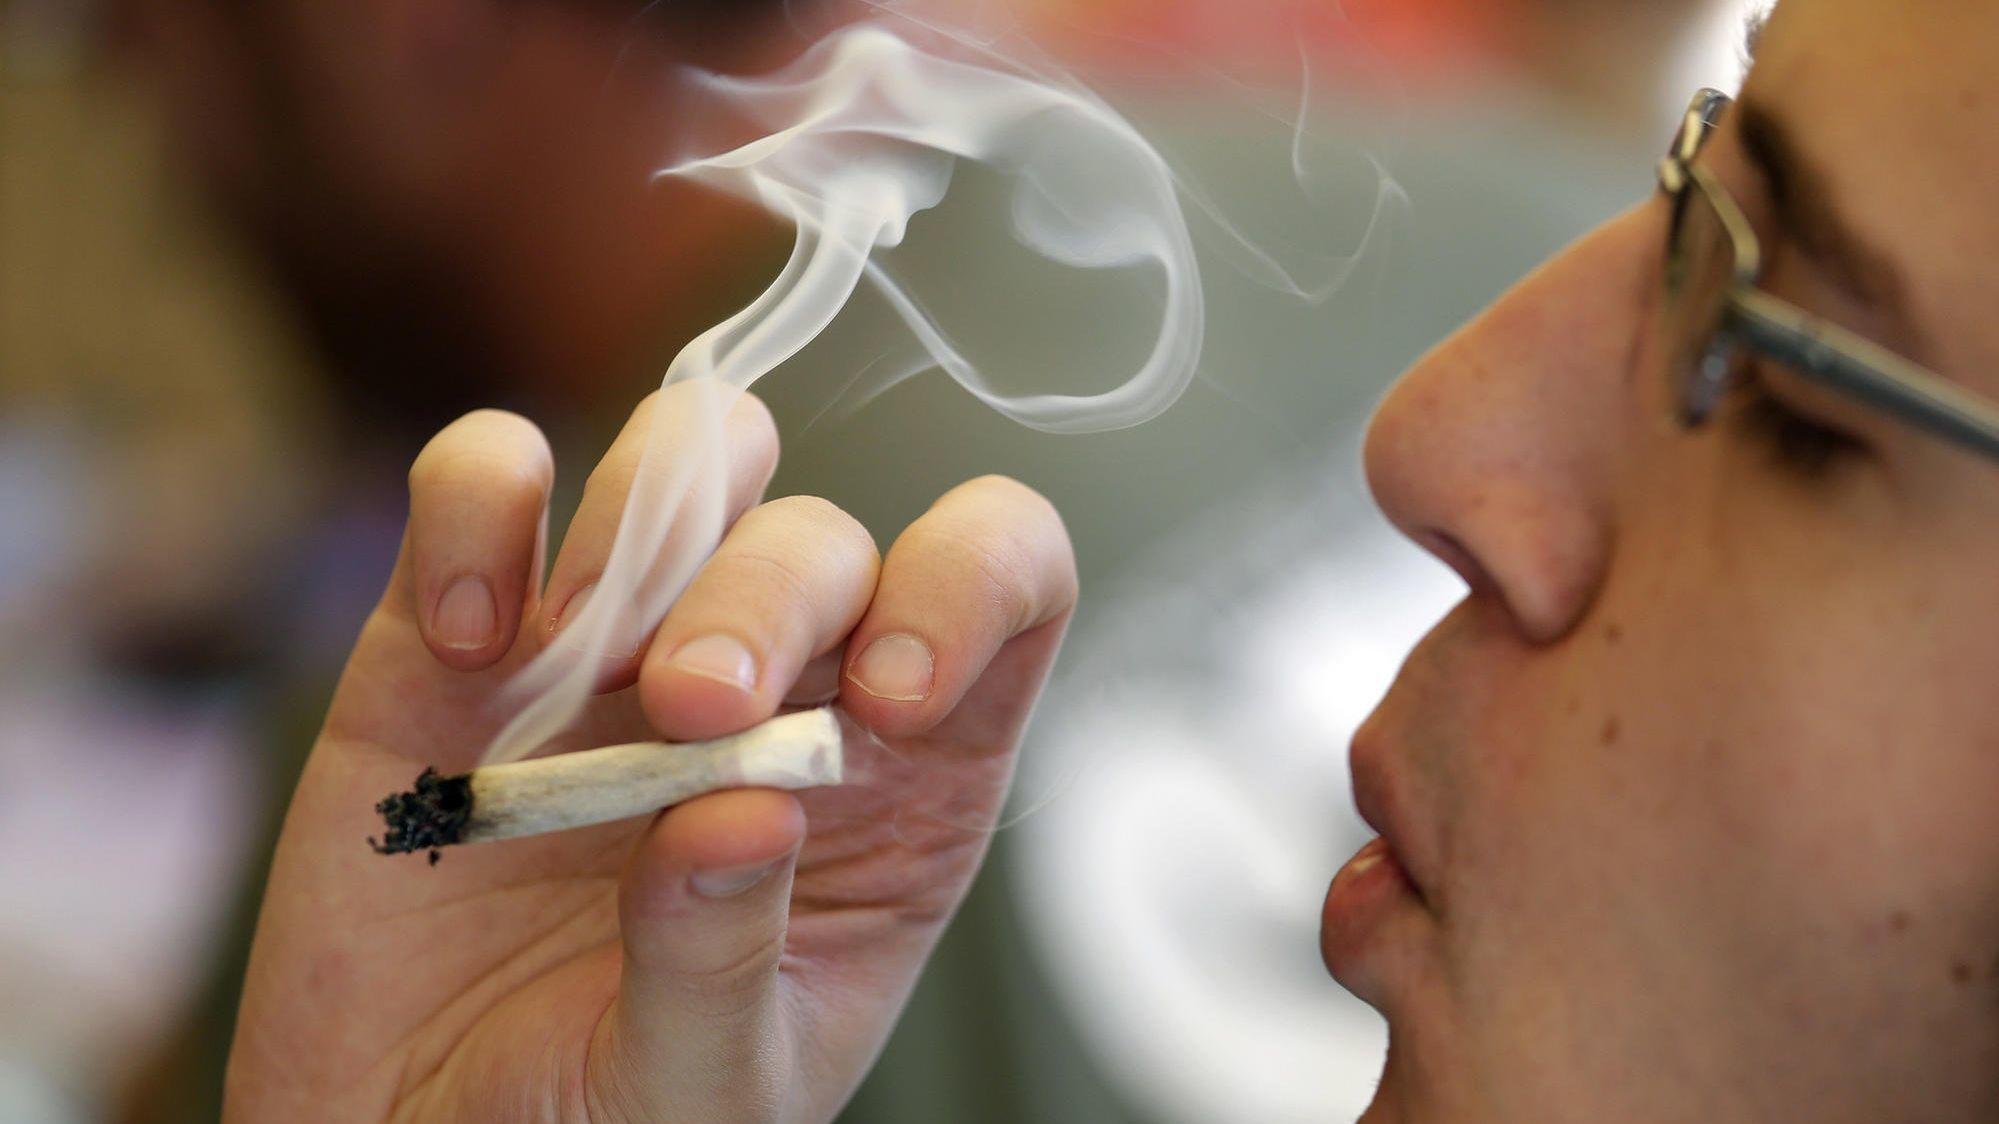 Should Florida legalize recreational marijuana? Tell us what you think.